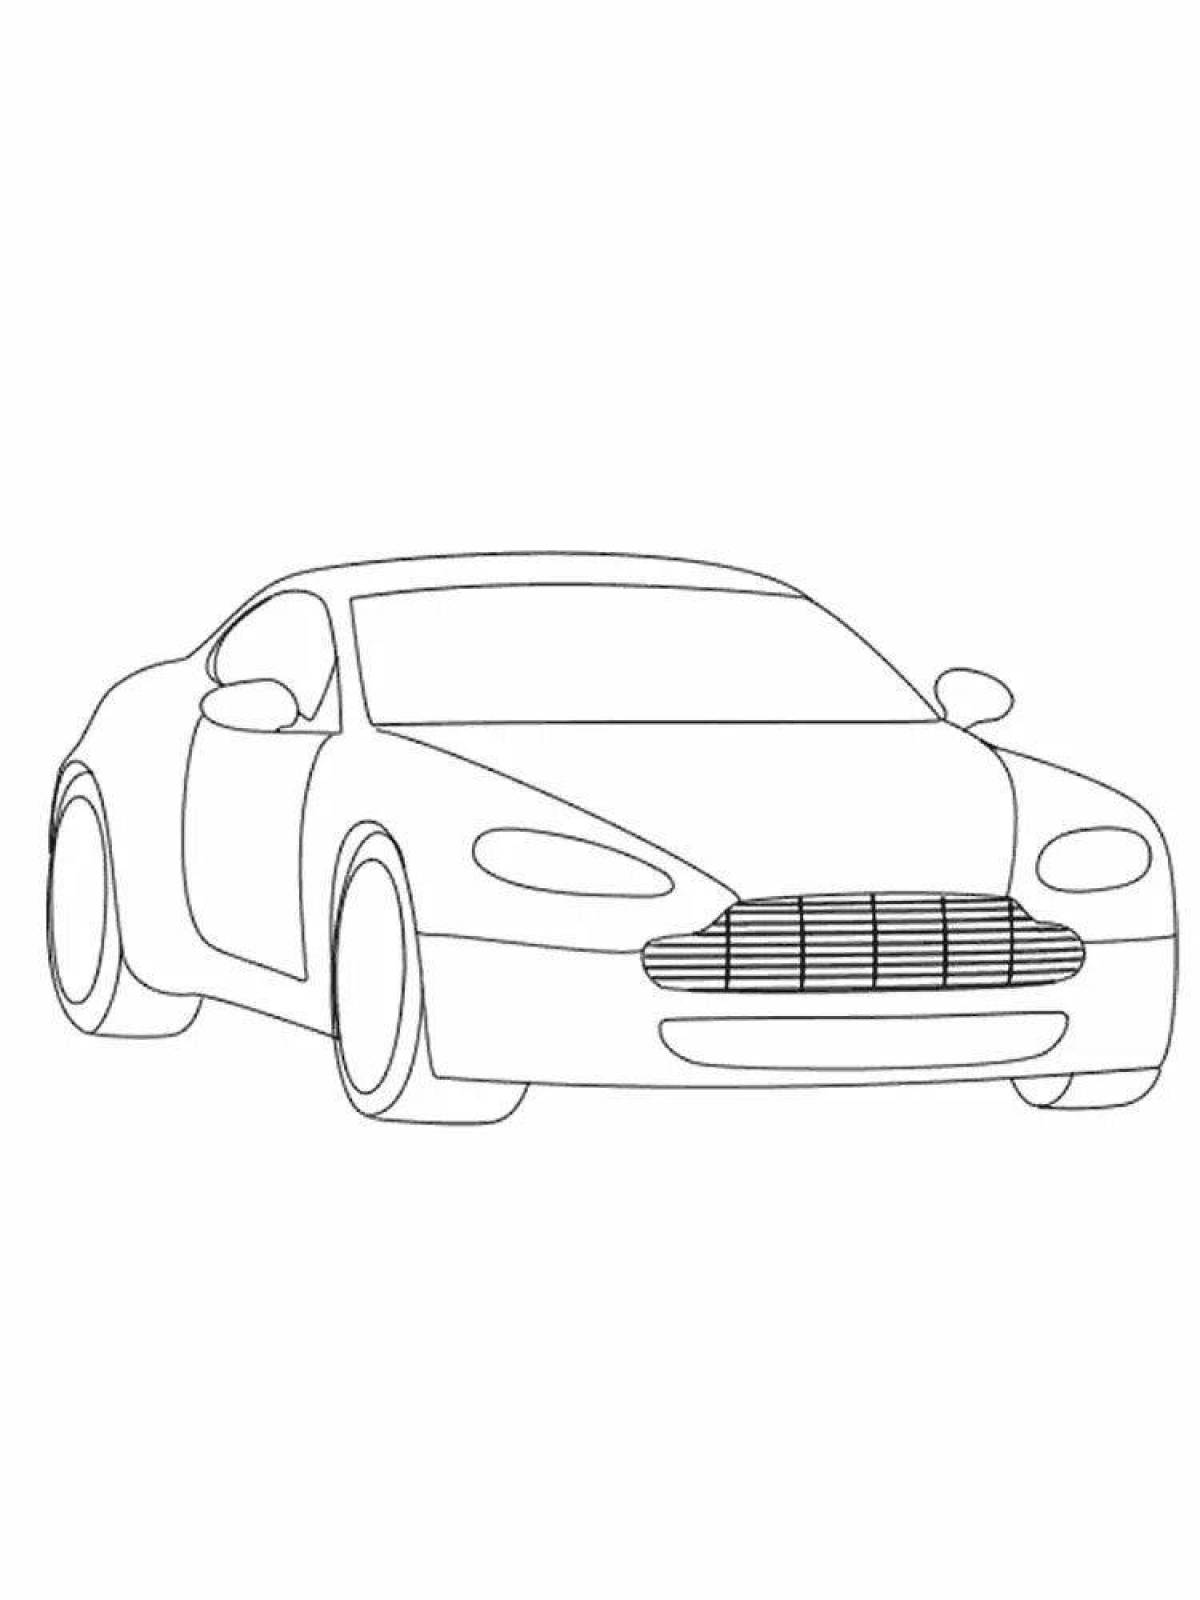 Aston martin majestic coloring